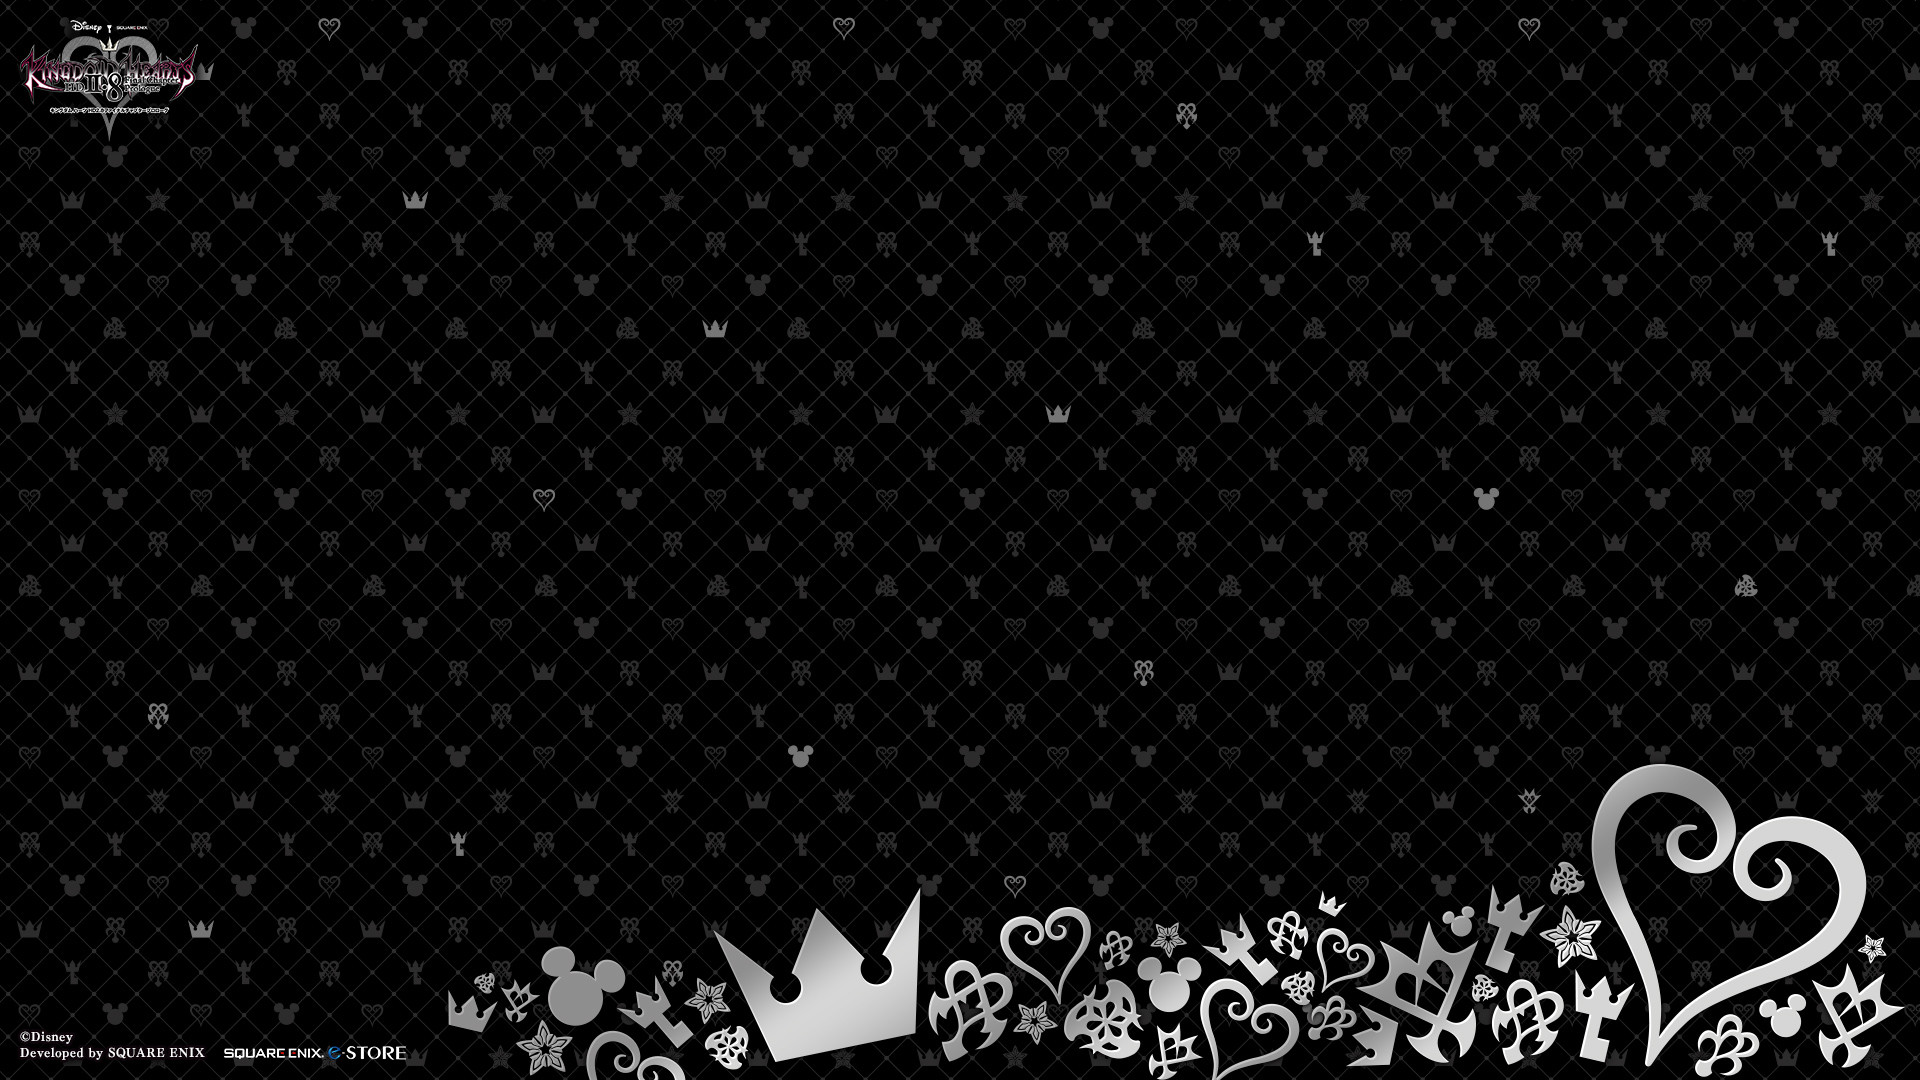 Kingdom - Kingdom Hearts 3 Pattern , HD Wallpaper & Backgrounds